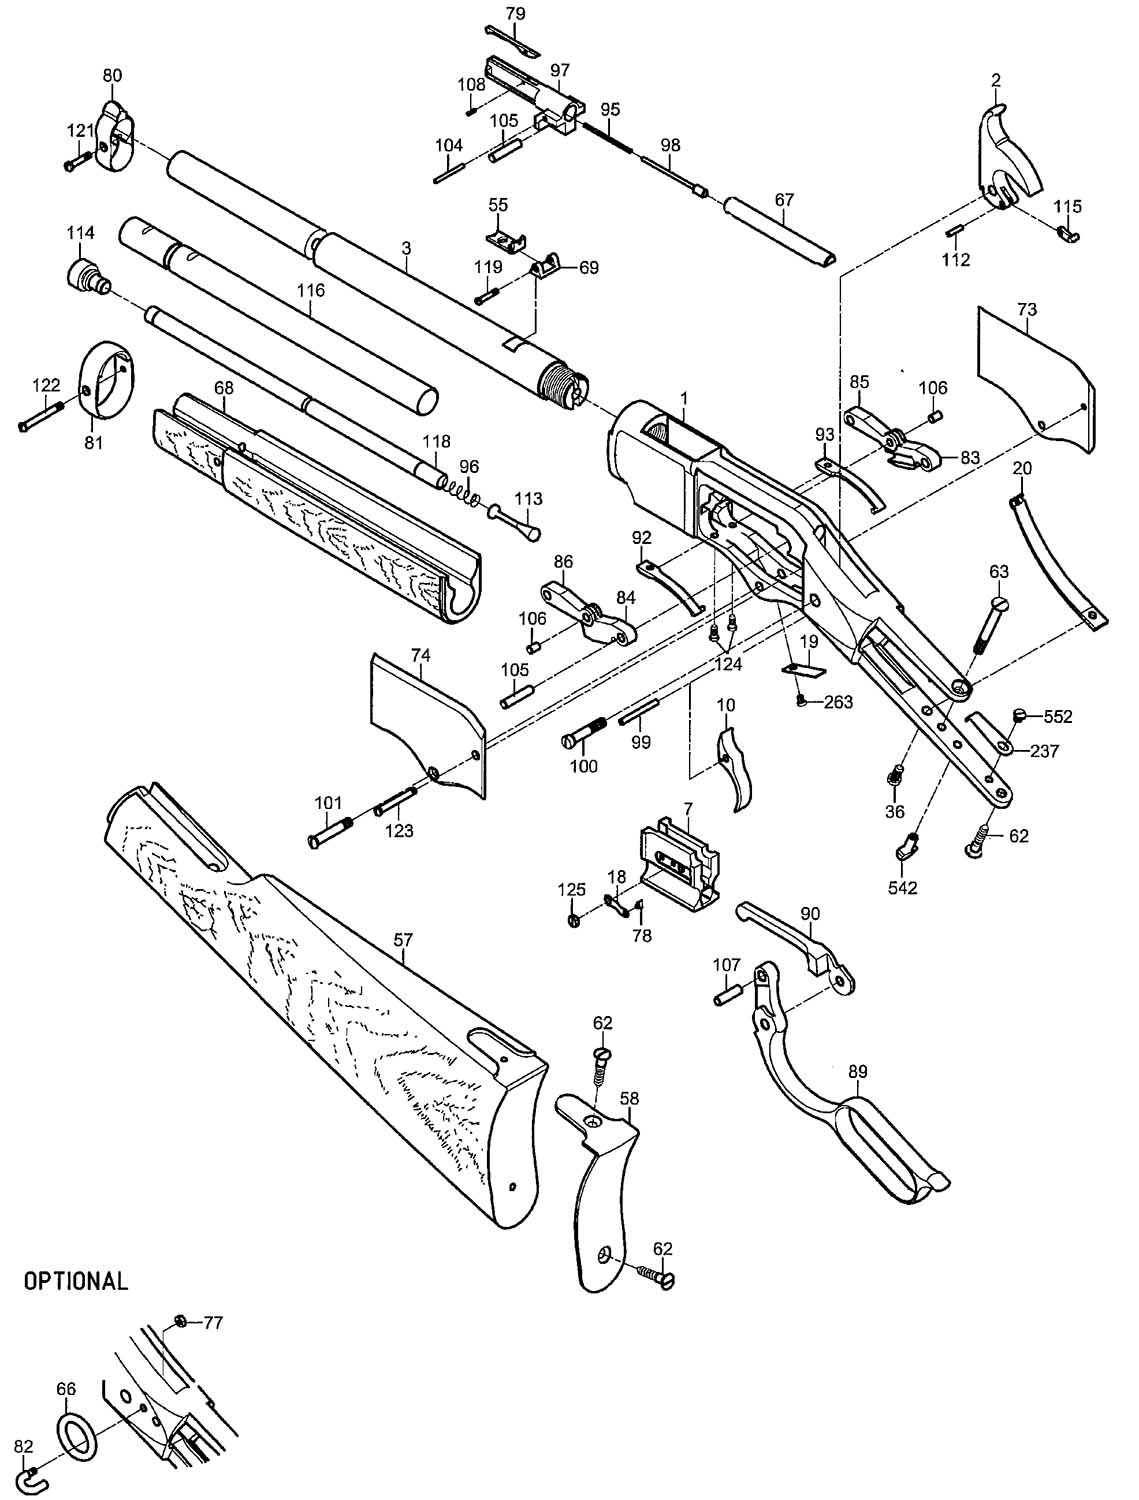 1866 YELLOWBOY RIFLE & CARBINE | Uberti Replicas | Top quality firearms ...